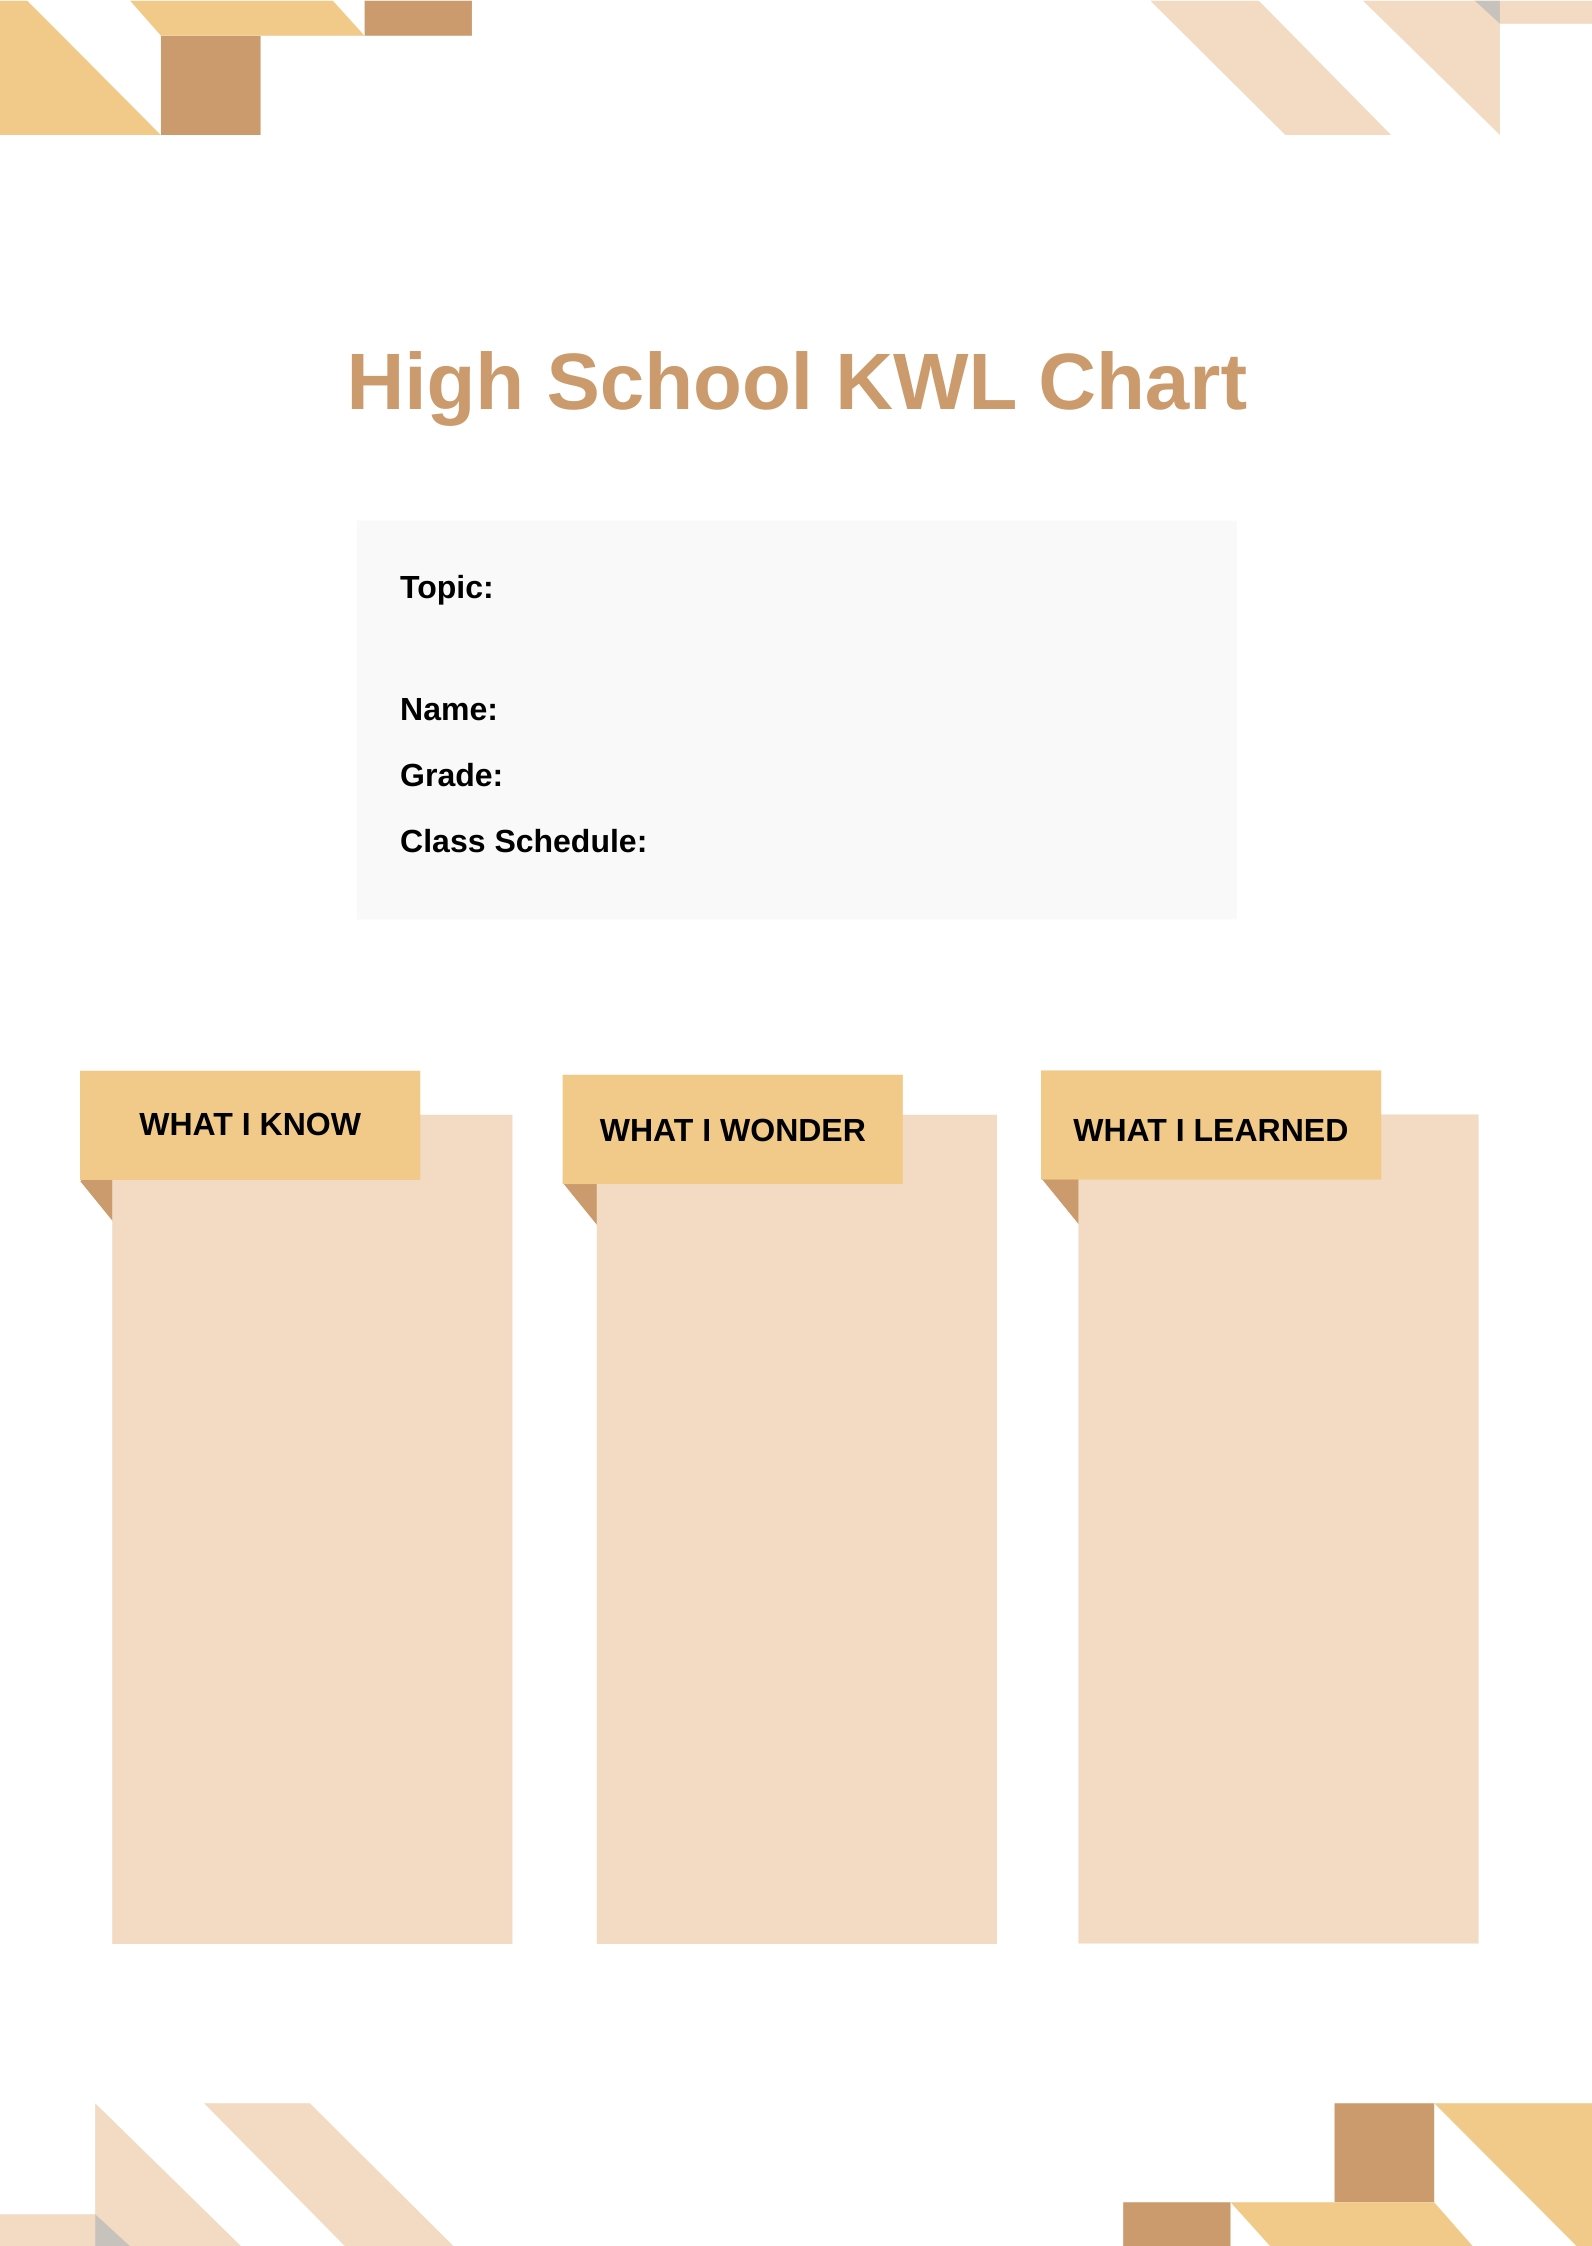 High School KWL Chart in PDF